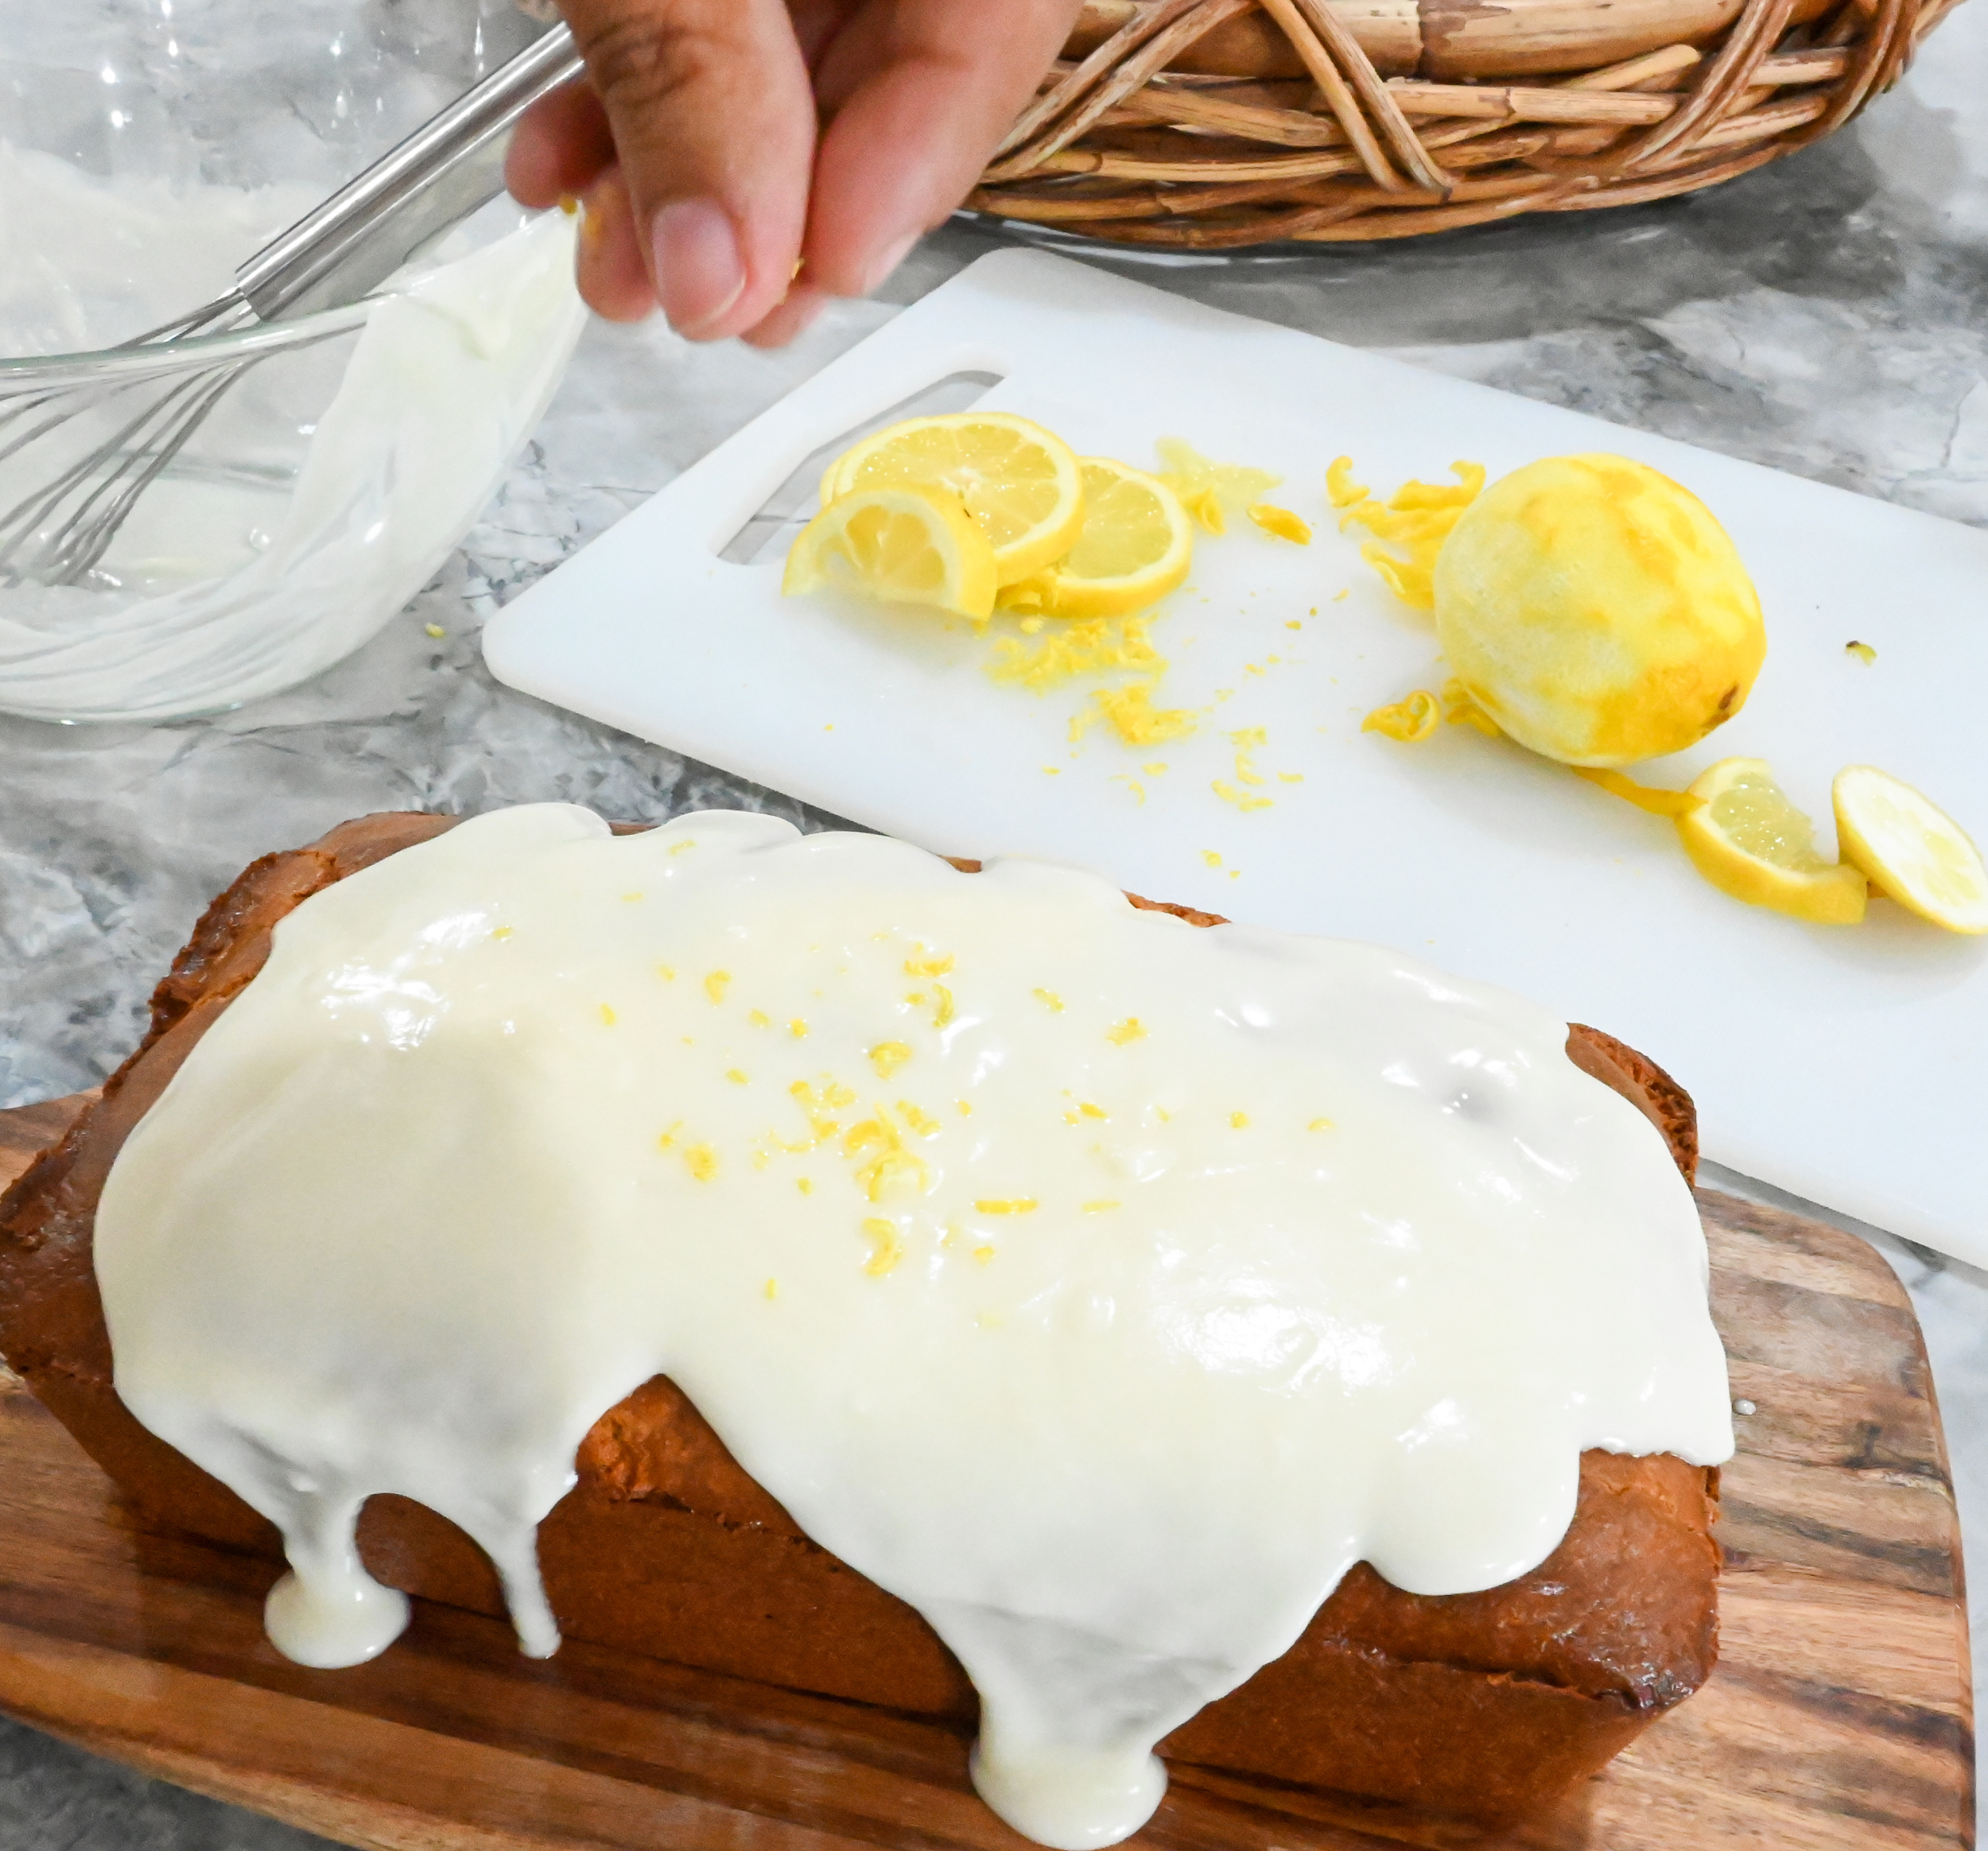 keto lemon pound cake being topped with lemon zest